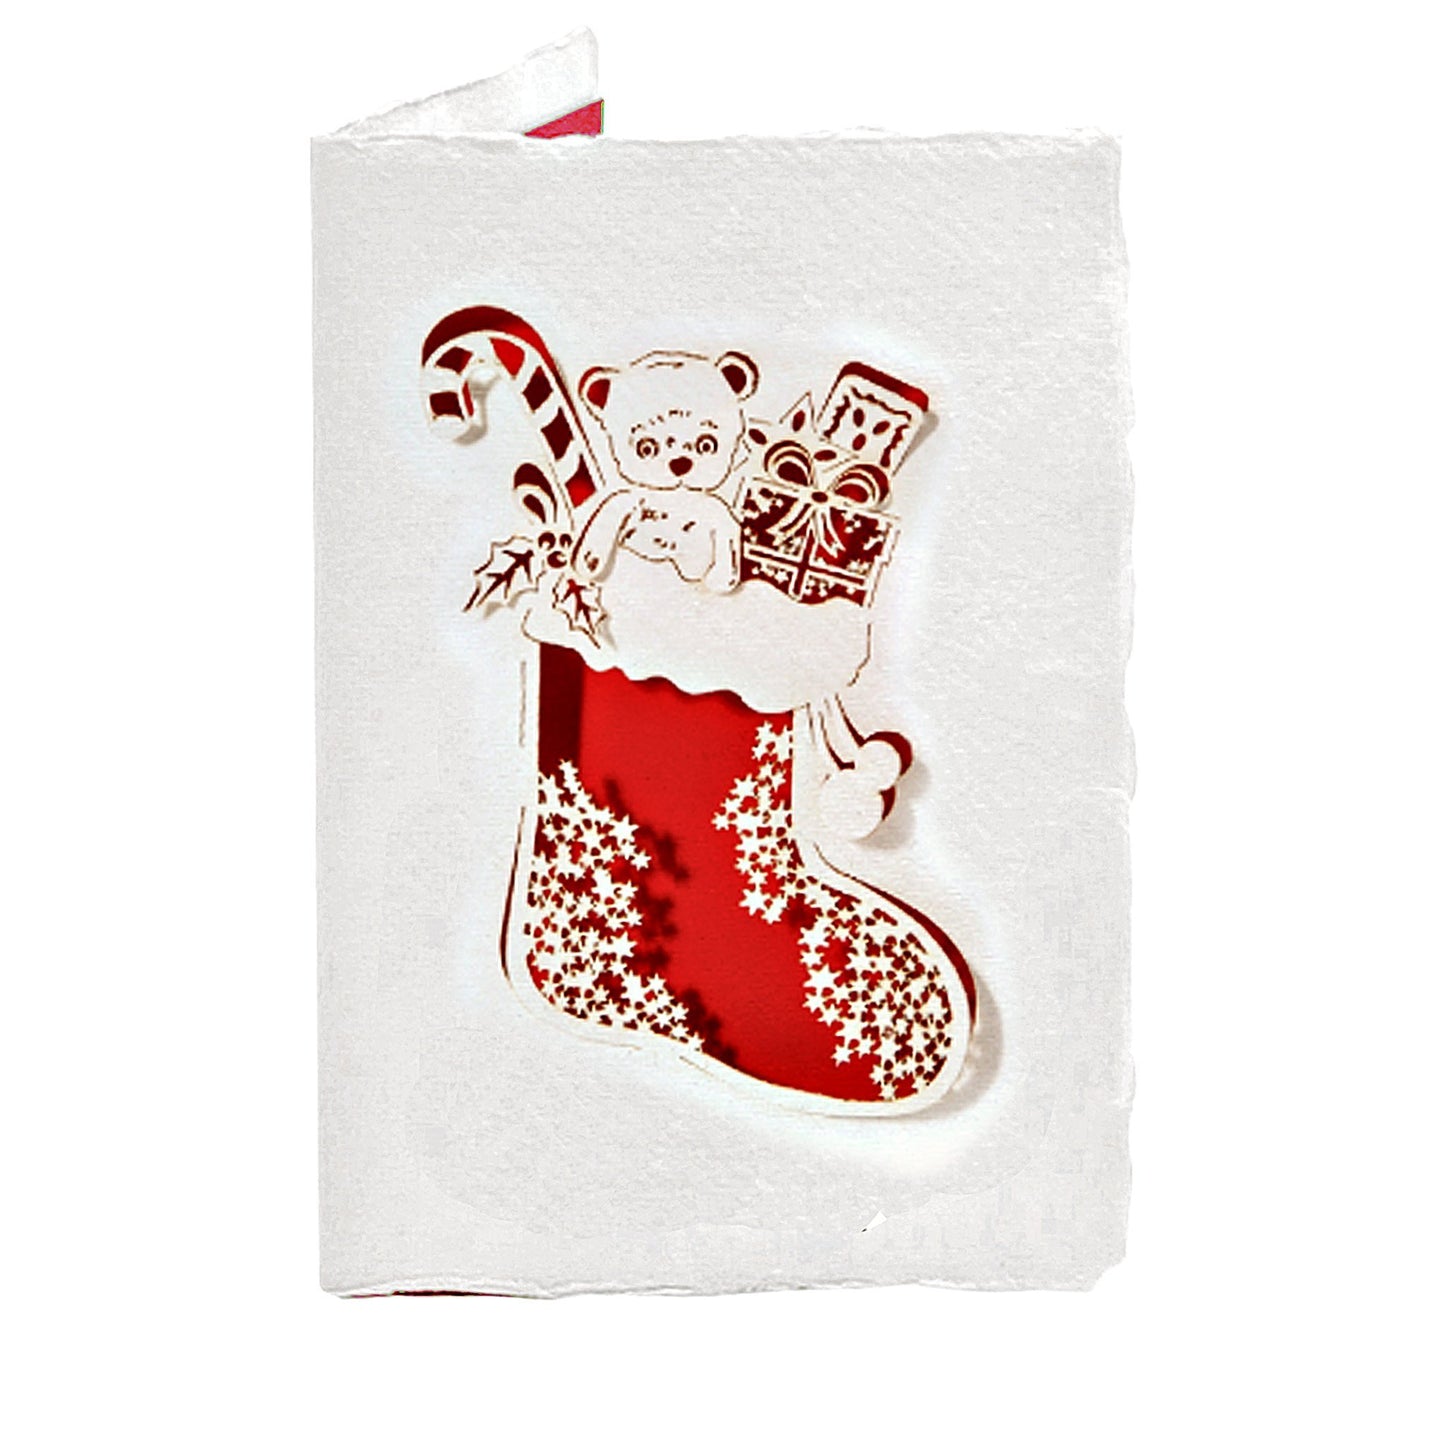 Grußkarte aus Bütte "Nikolausstiefel" - Vandeley